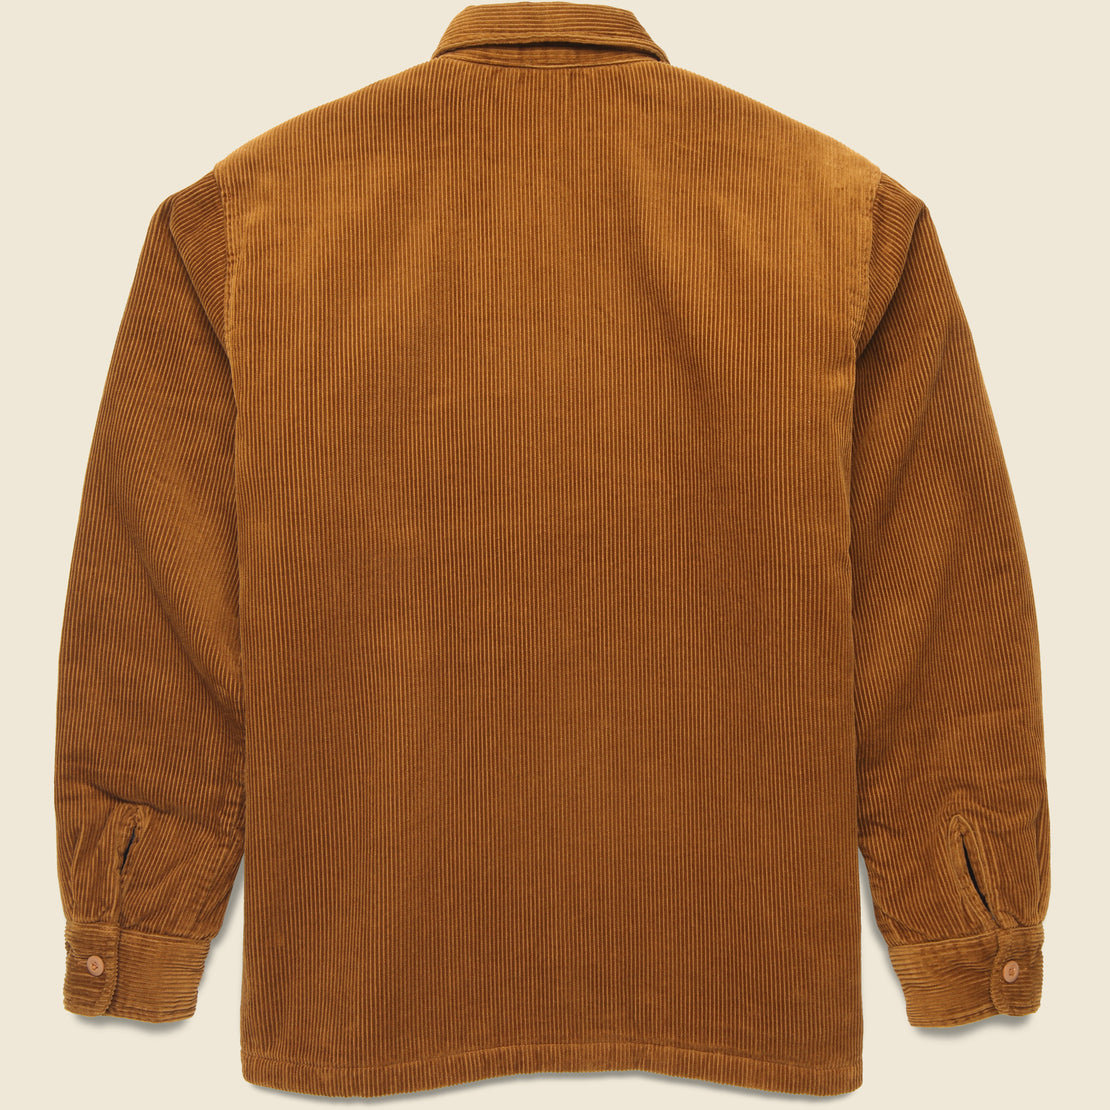 Whitsome Shirt Jac - Deep Hamilton Brown - Carhartt WIP - STAG Provisions - Outerwear - Shirt Jacket